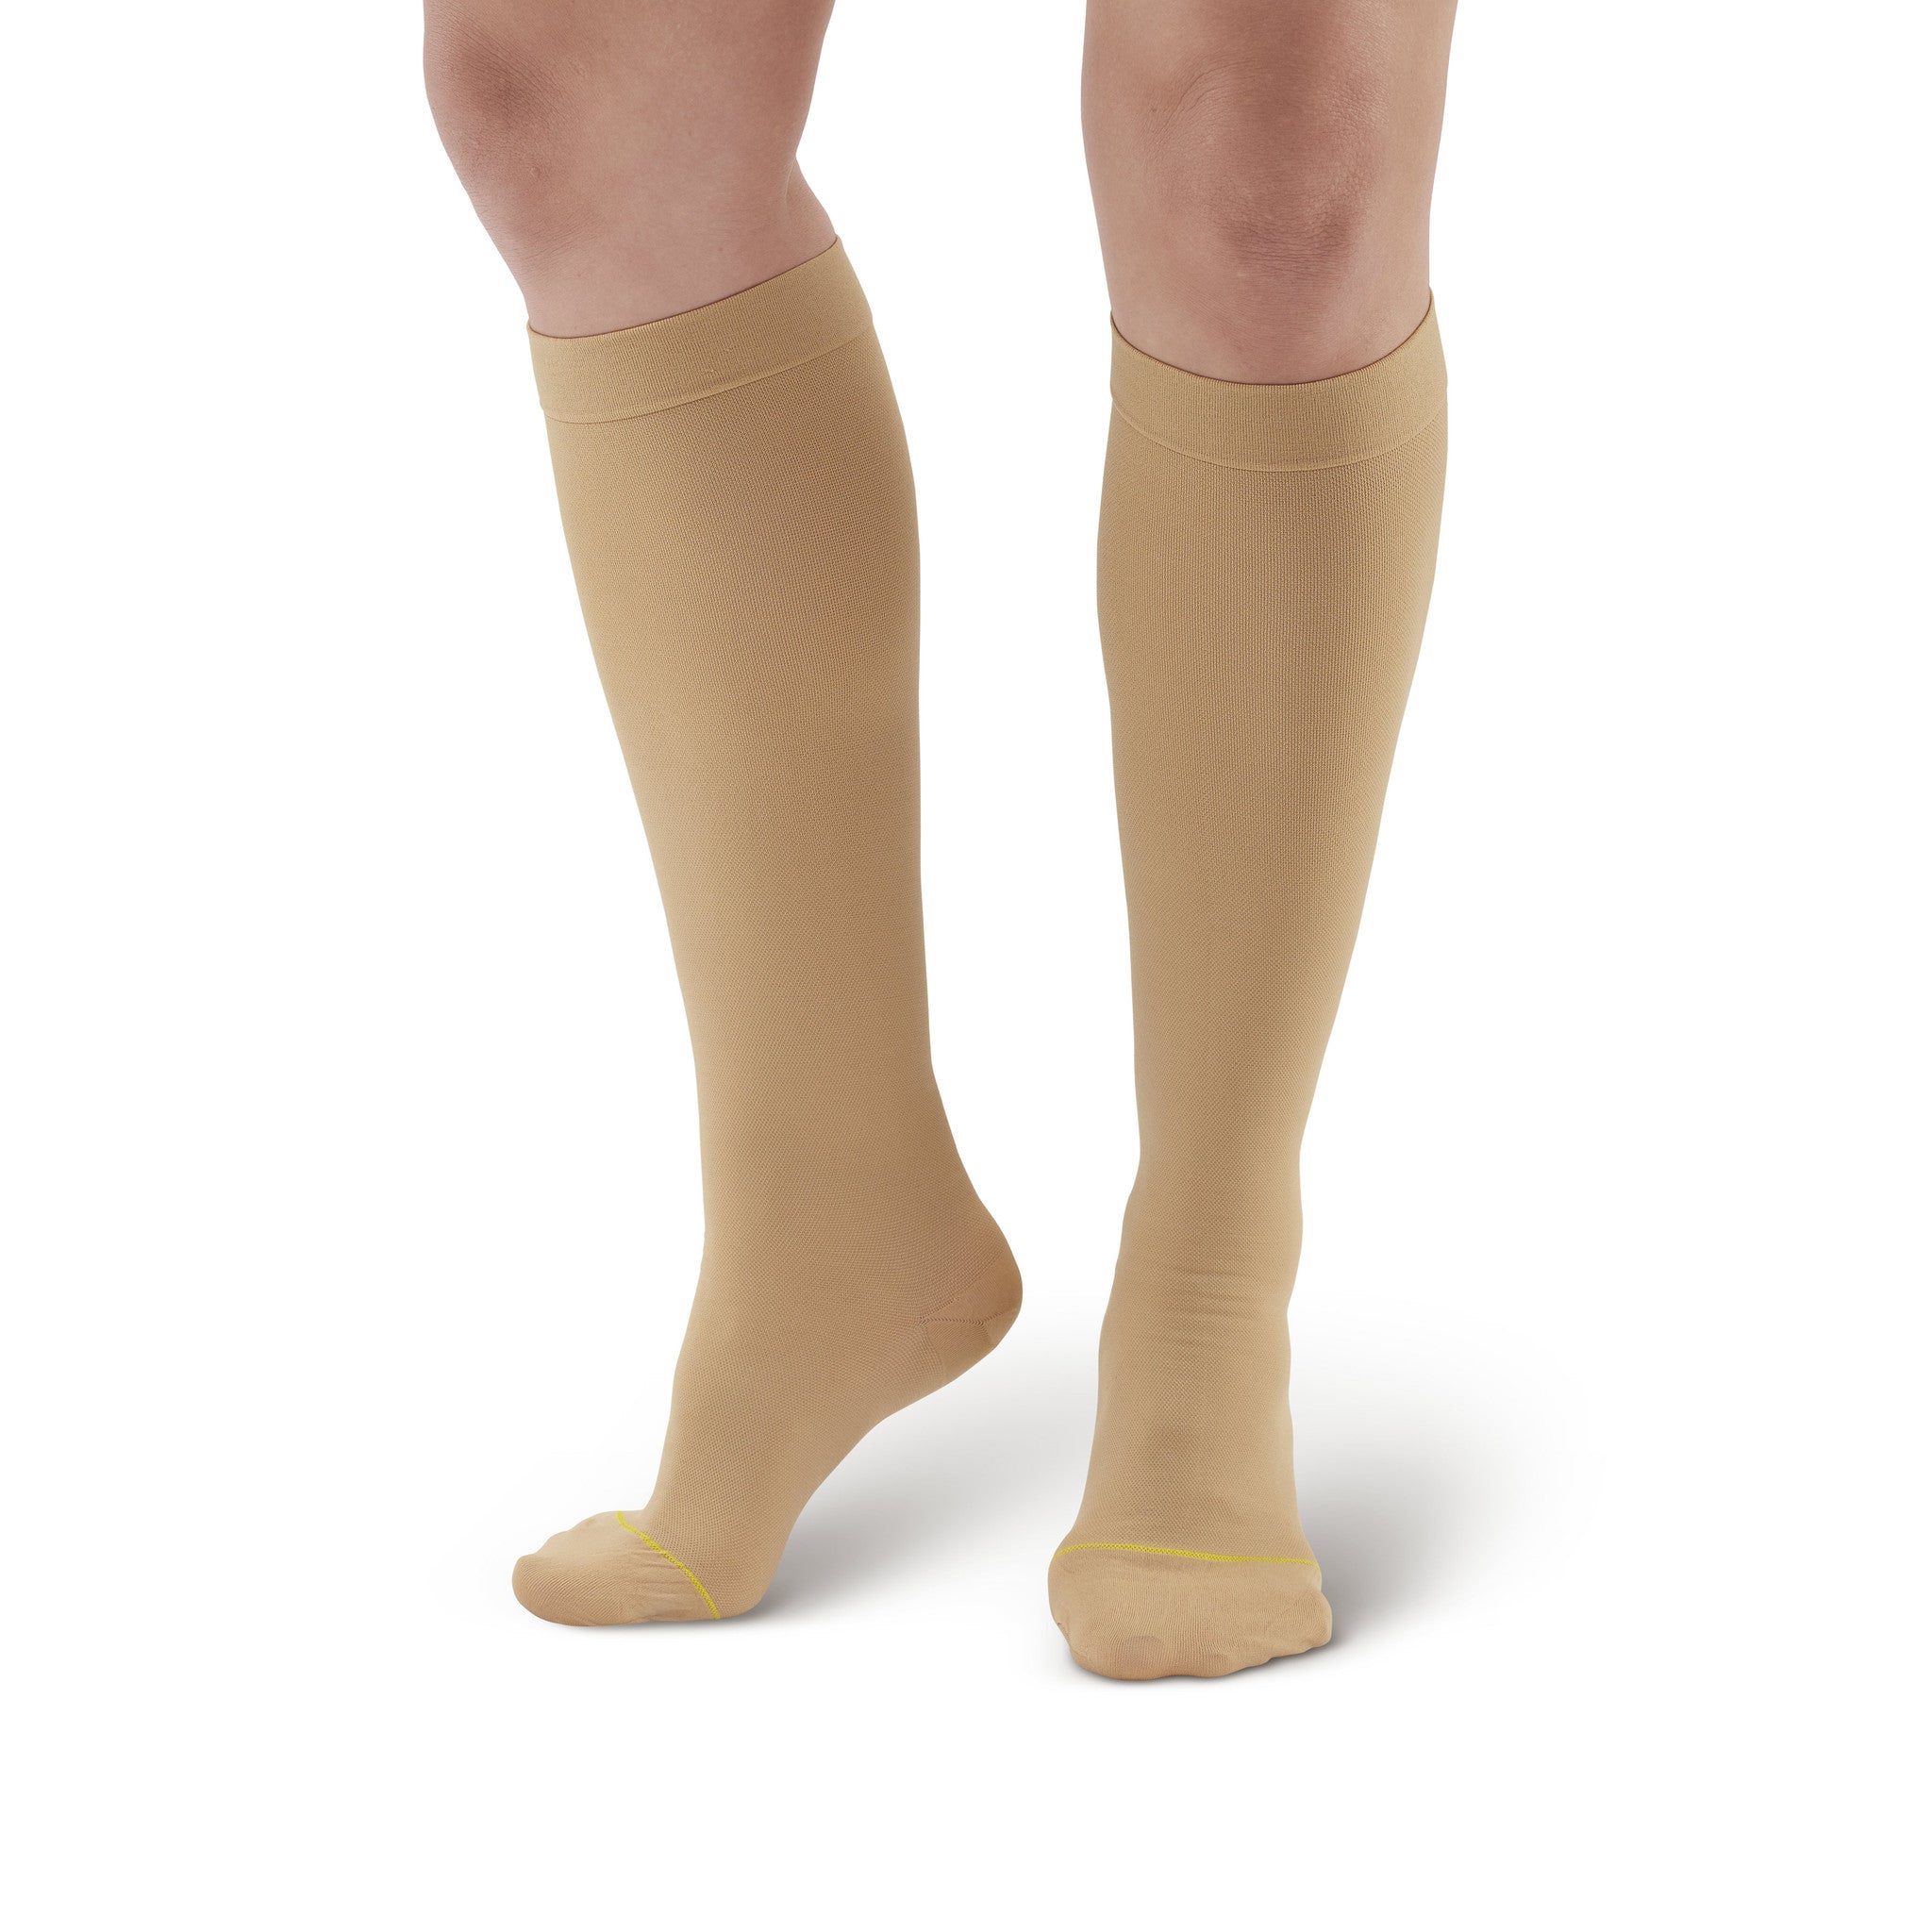 AW Style 222 Anti-Embolism Closed Toe Knee High Stockings - 18 mmHg ...